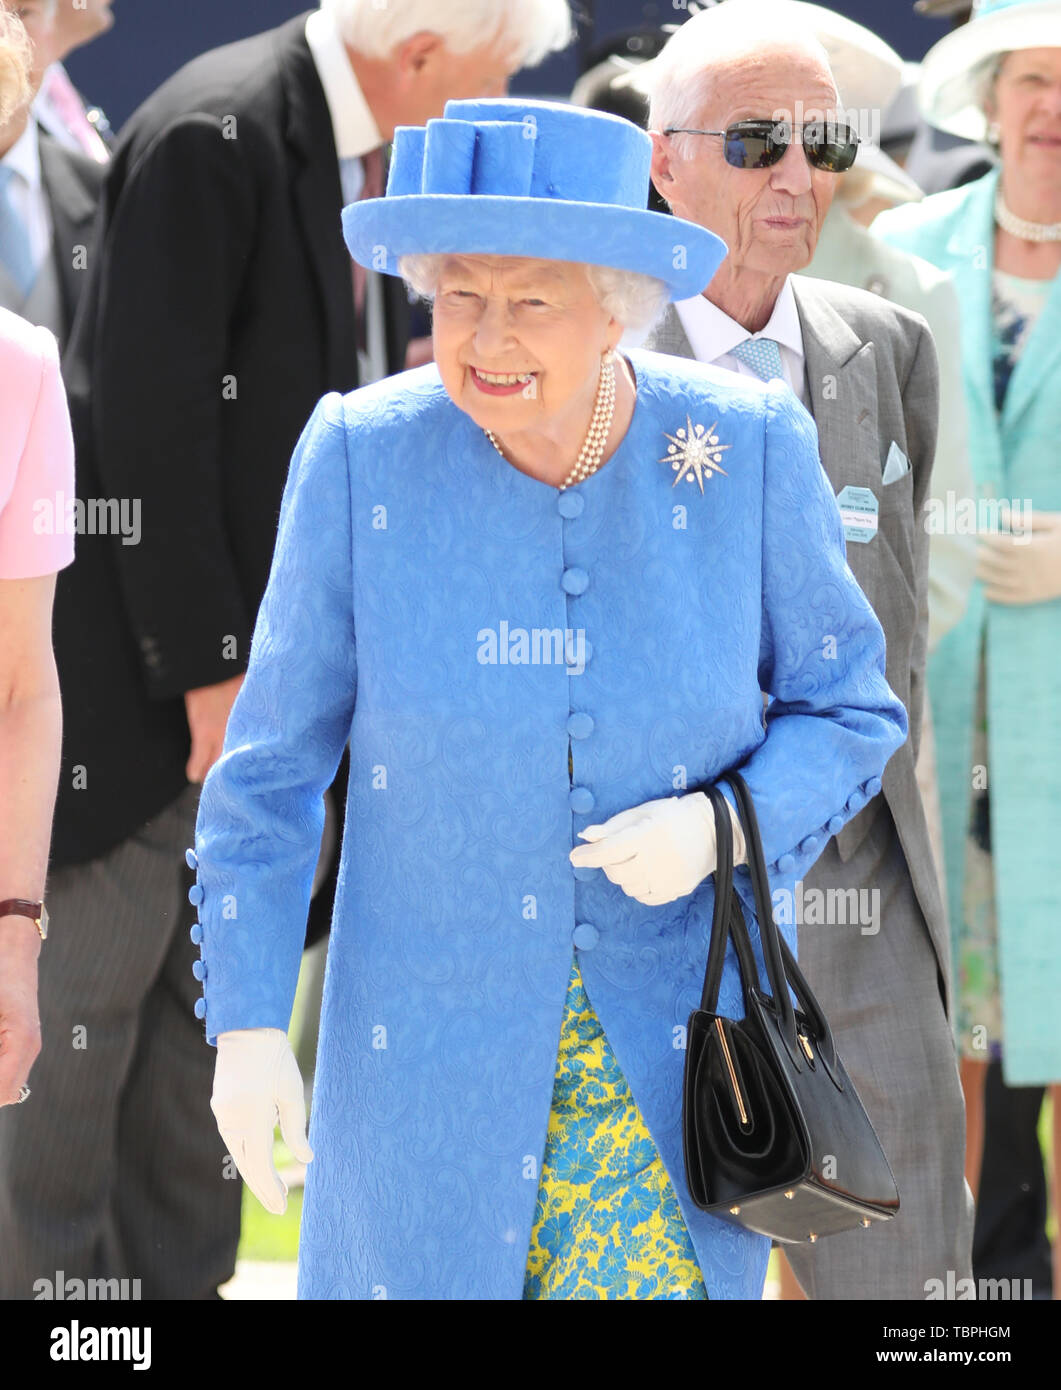 Queen Elizabeth II kommt an der Investec Epsom Derby Pferderennen, Epsom, Surrey, UK am 1. Juni 2019. Stockfoto